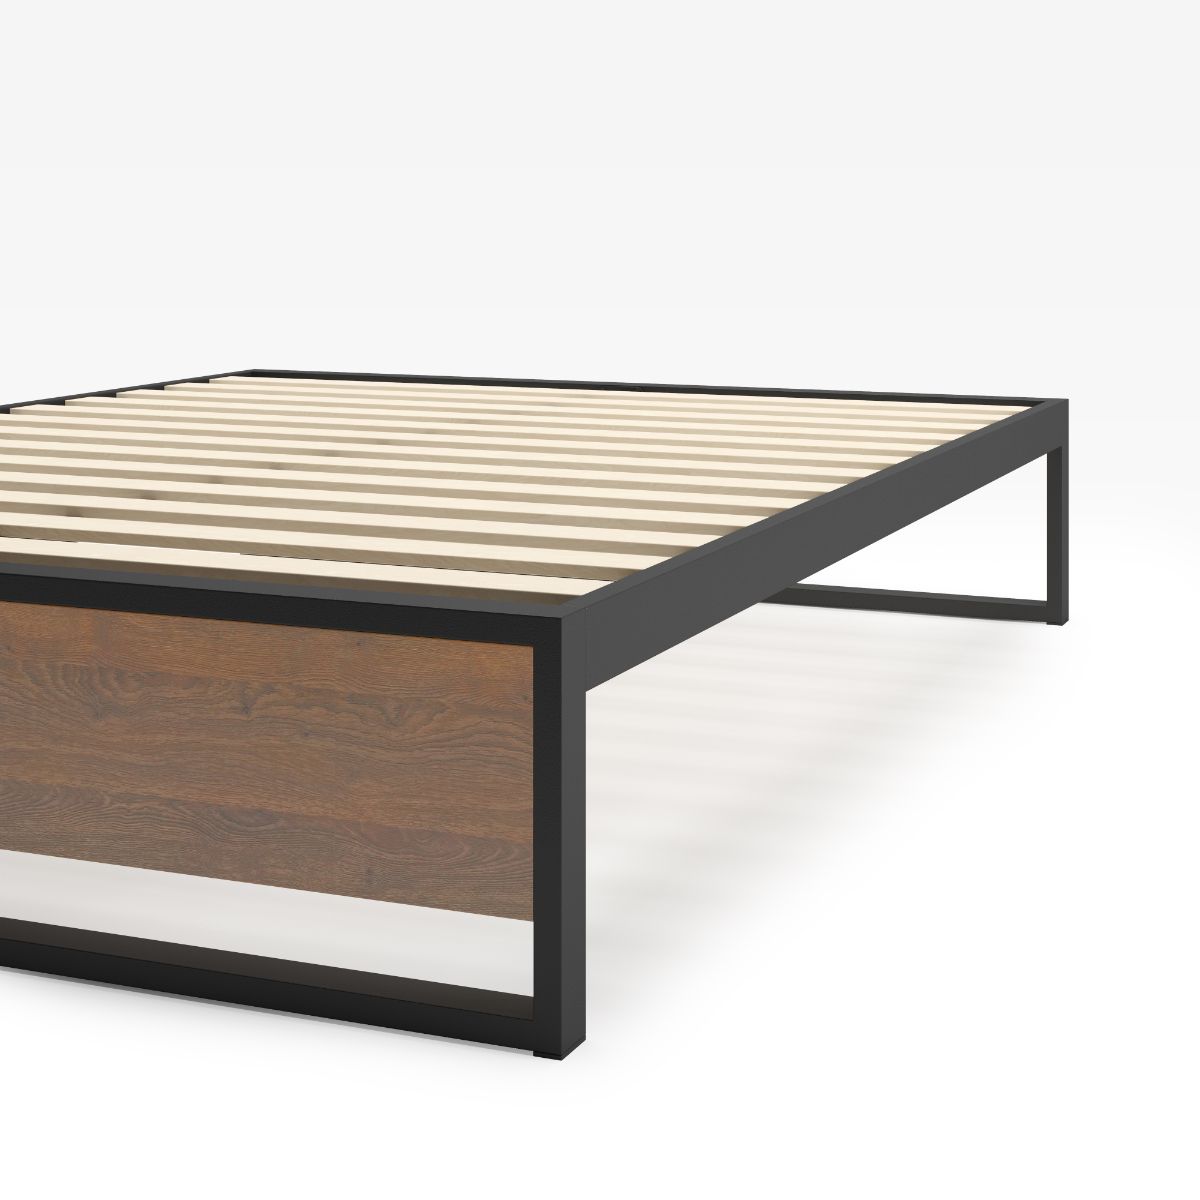 14 inch Suzanne Metal and Wood Platform Bed frame Frame